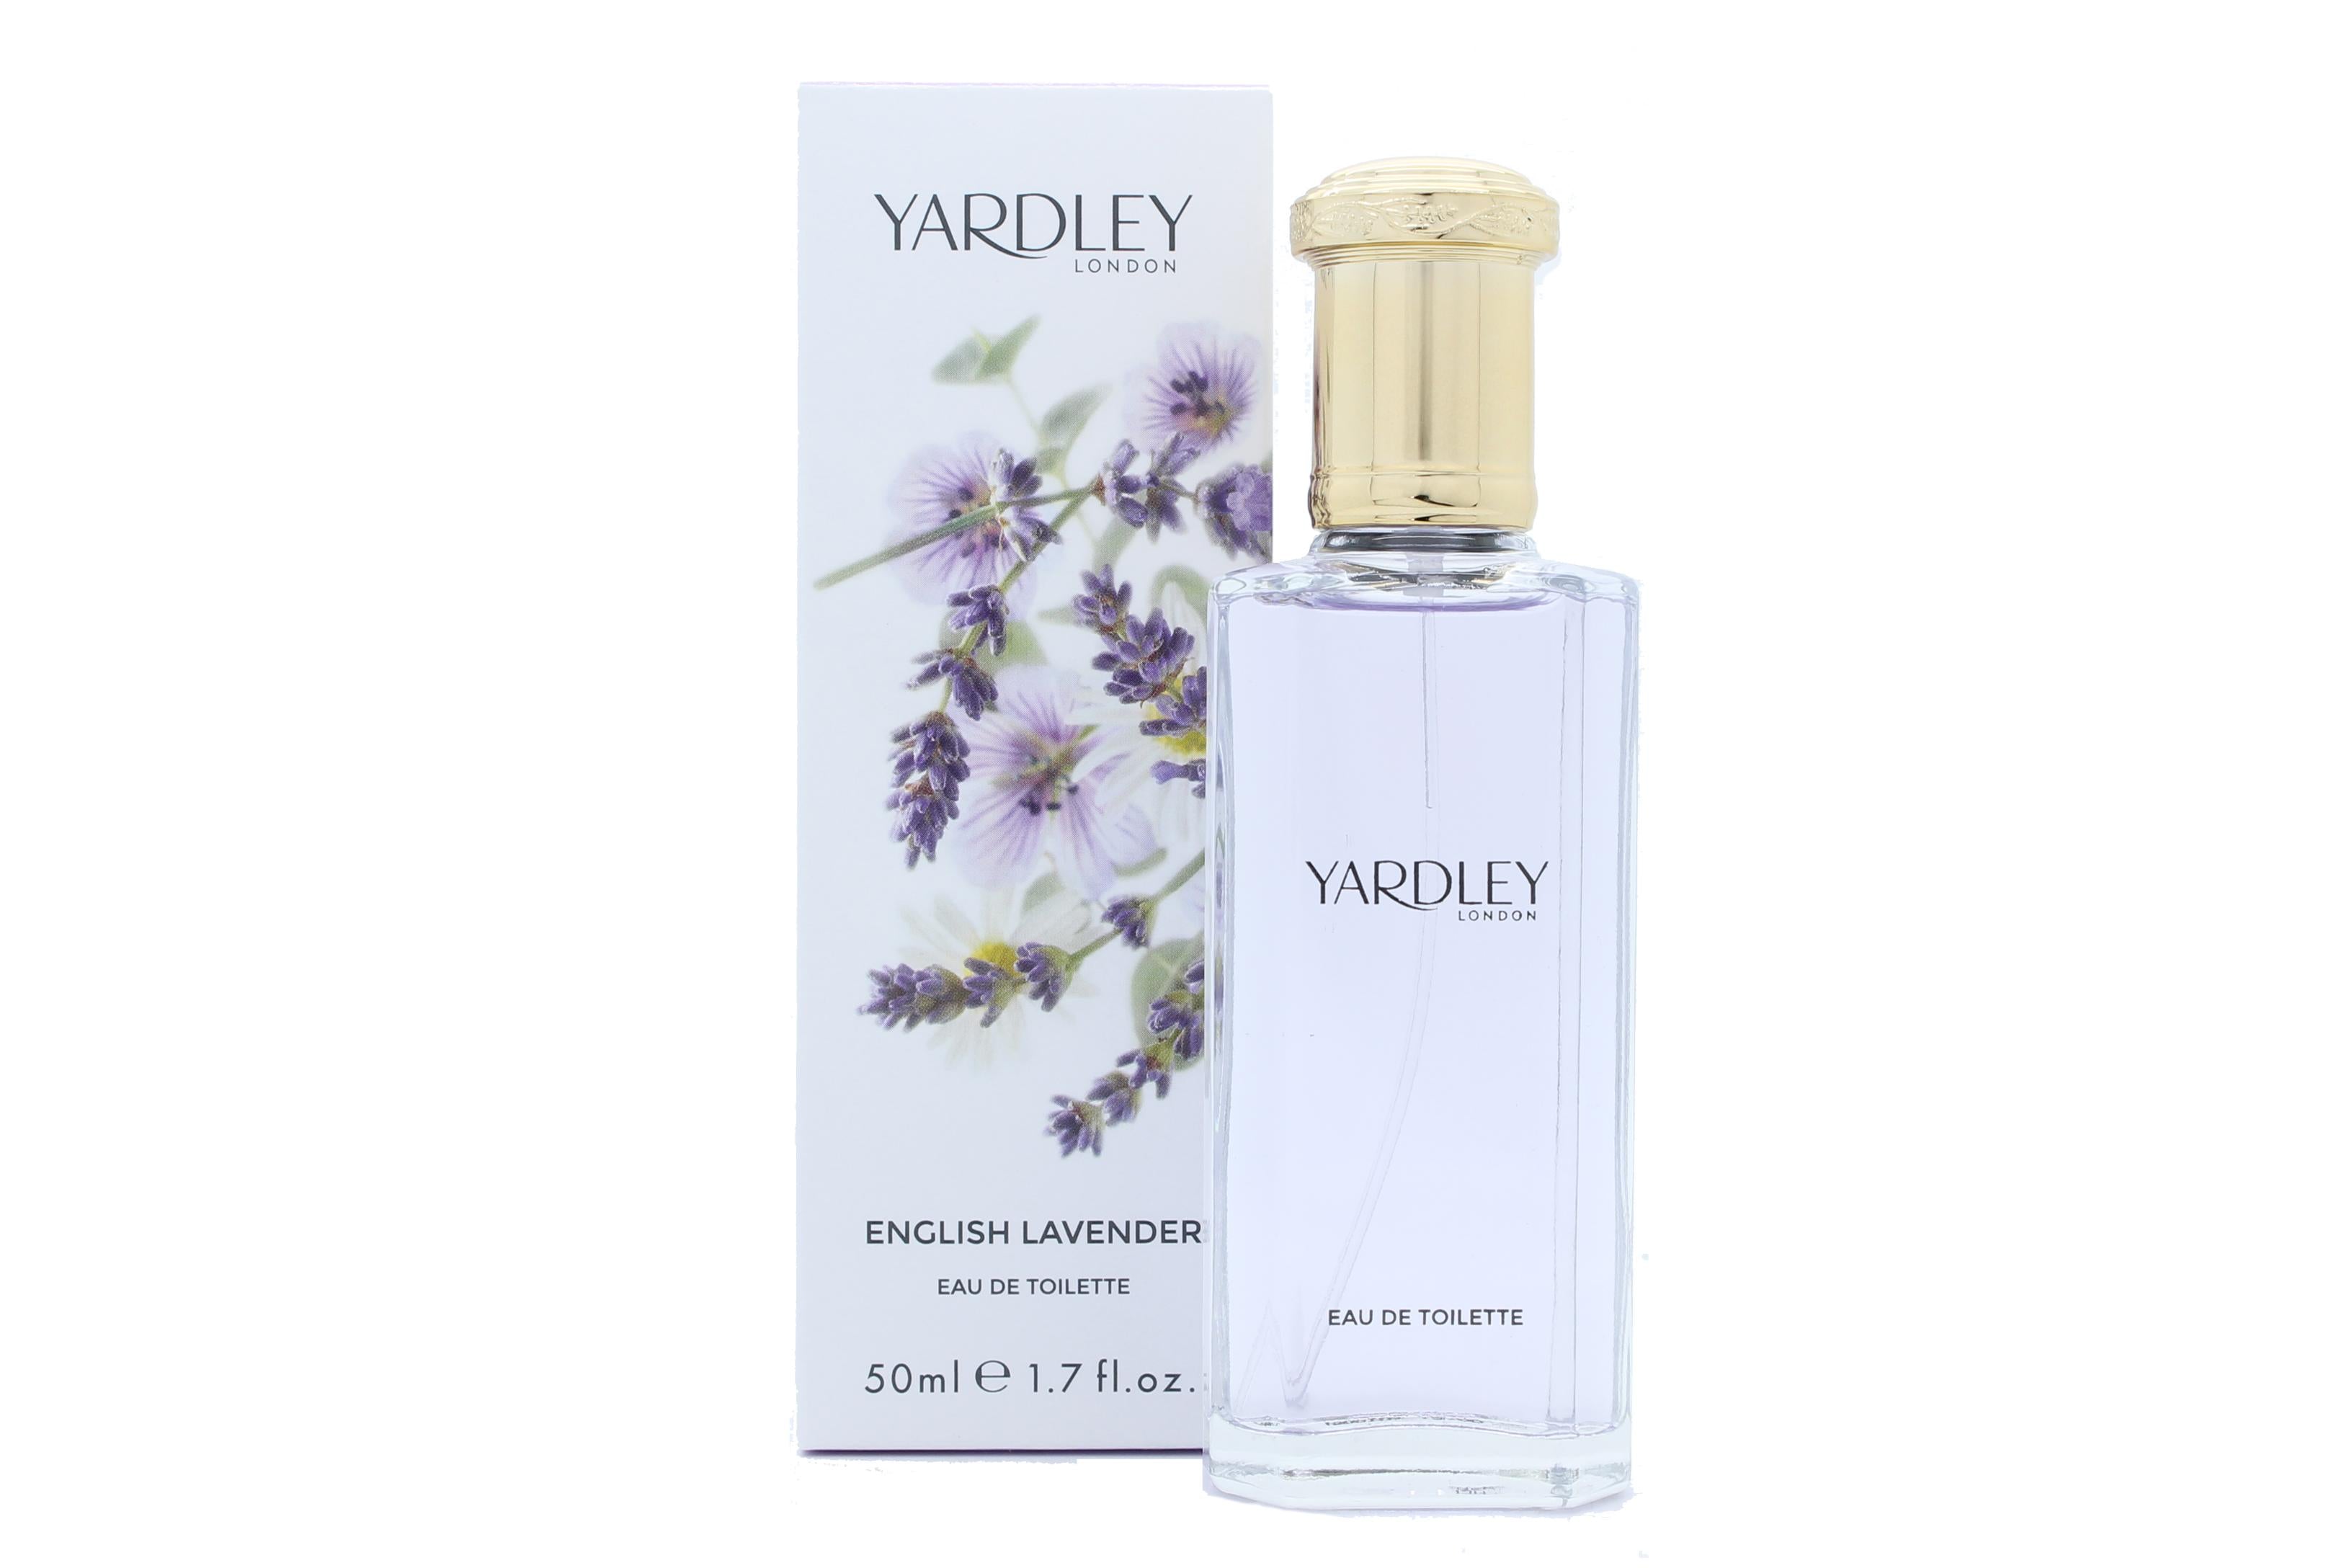 View Yardley English Lavender Eau de Toilette 50ml Spray information